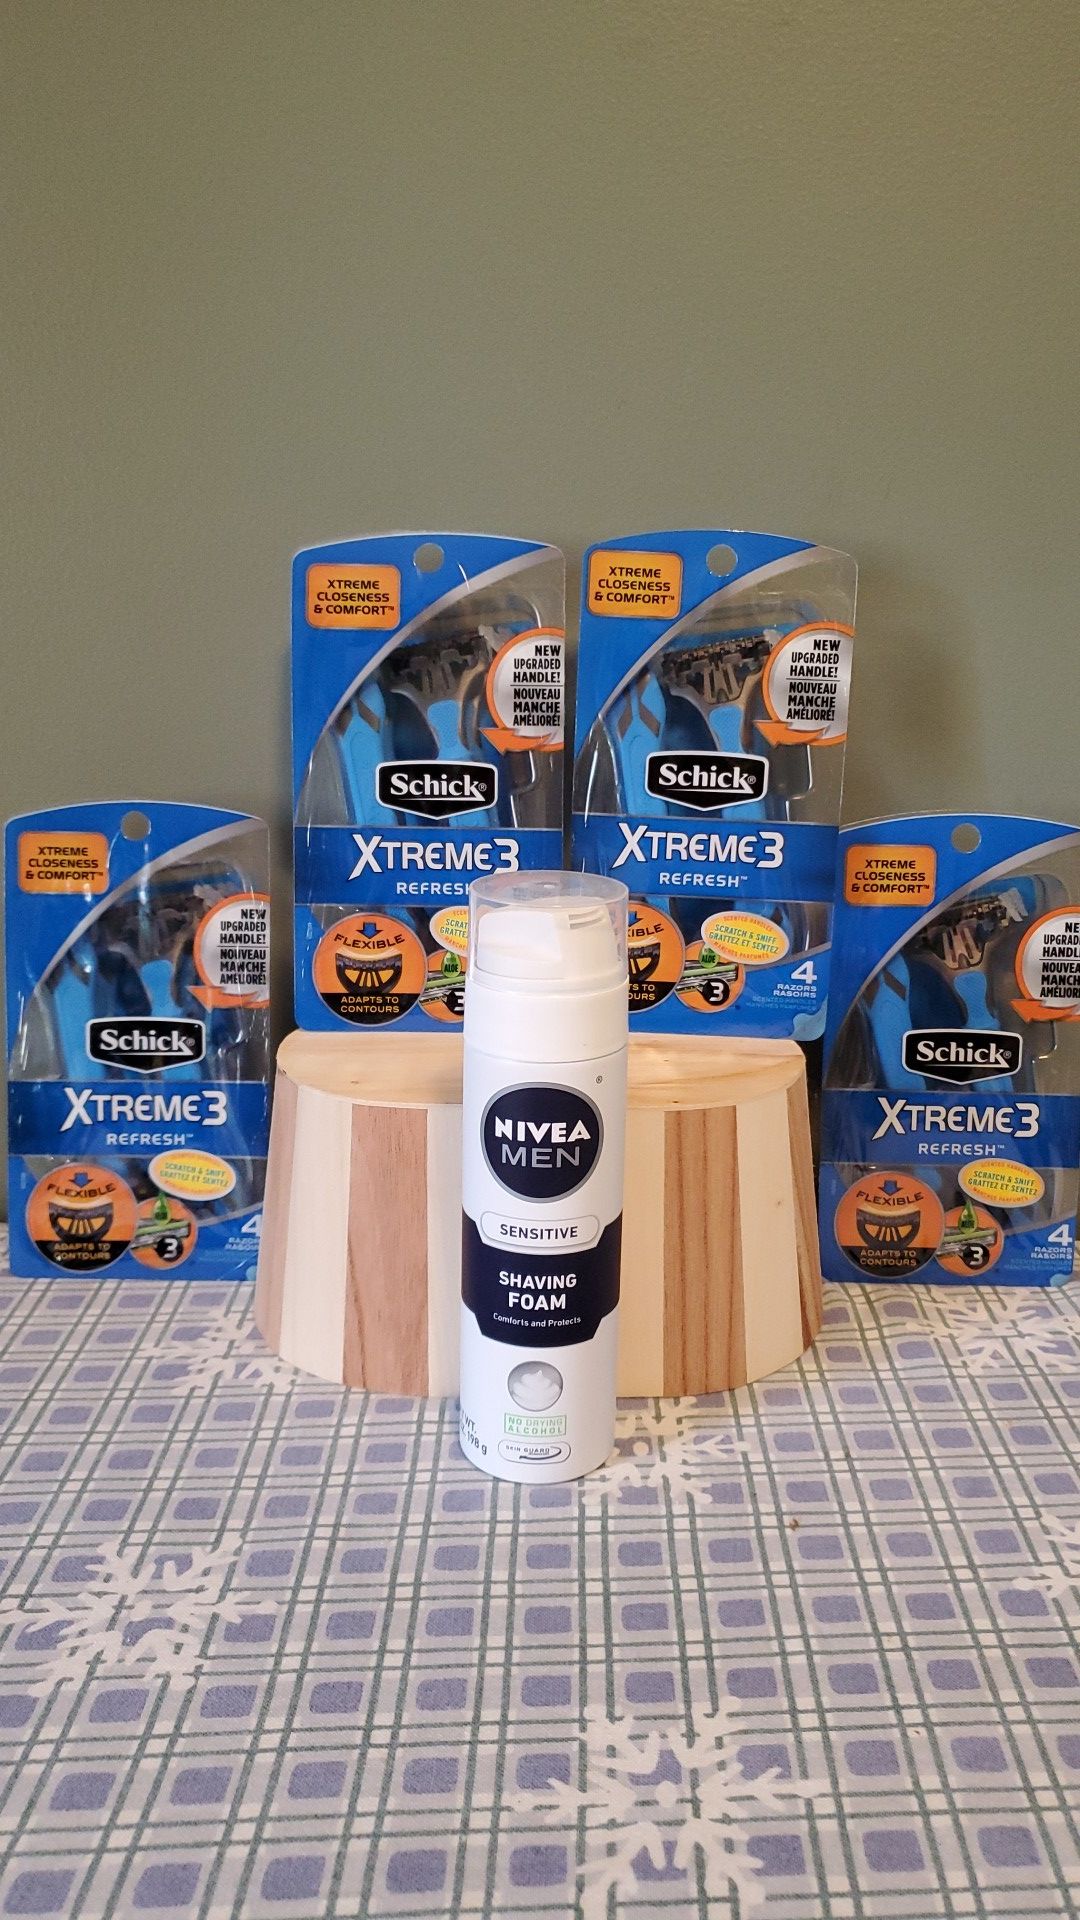 Schick Xtreme 3 razors and Nivea sensitive shaving foam